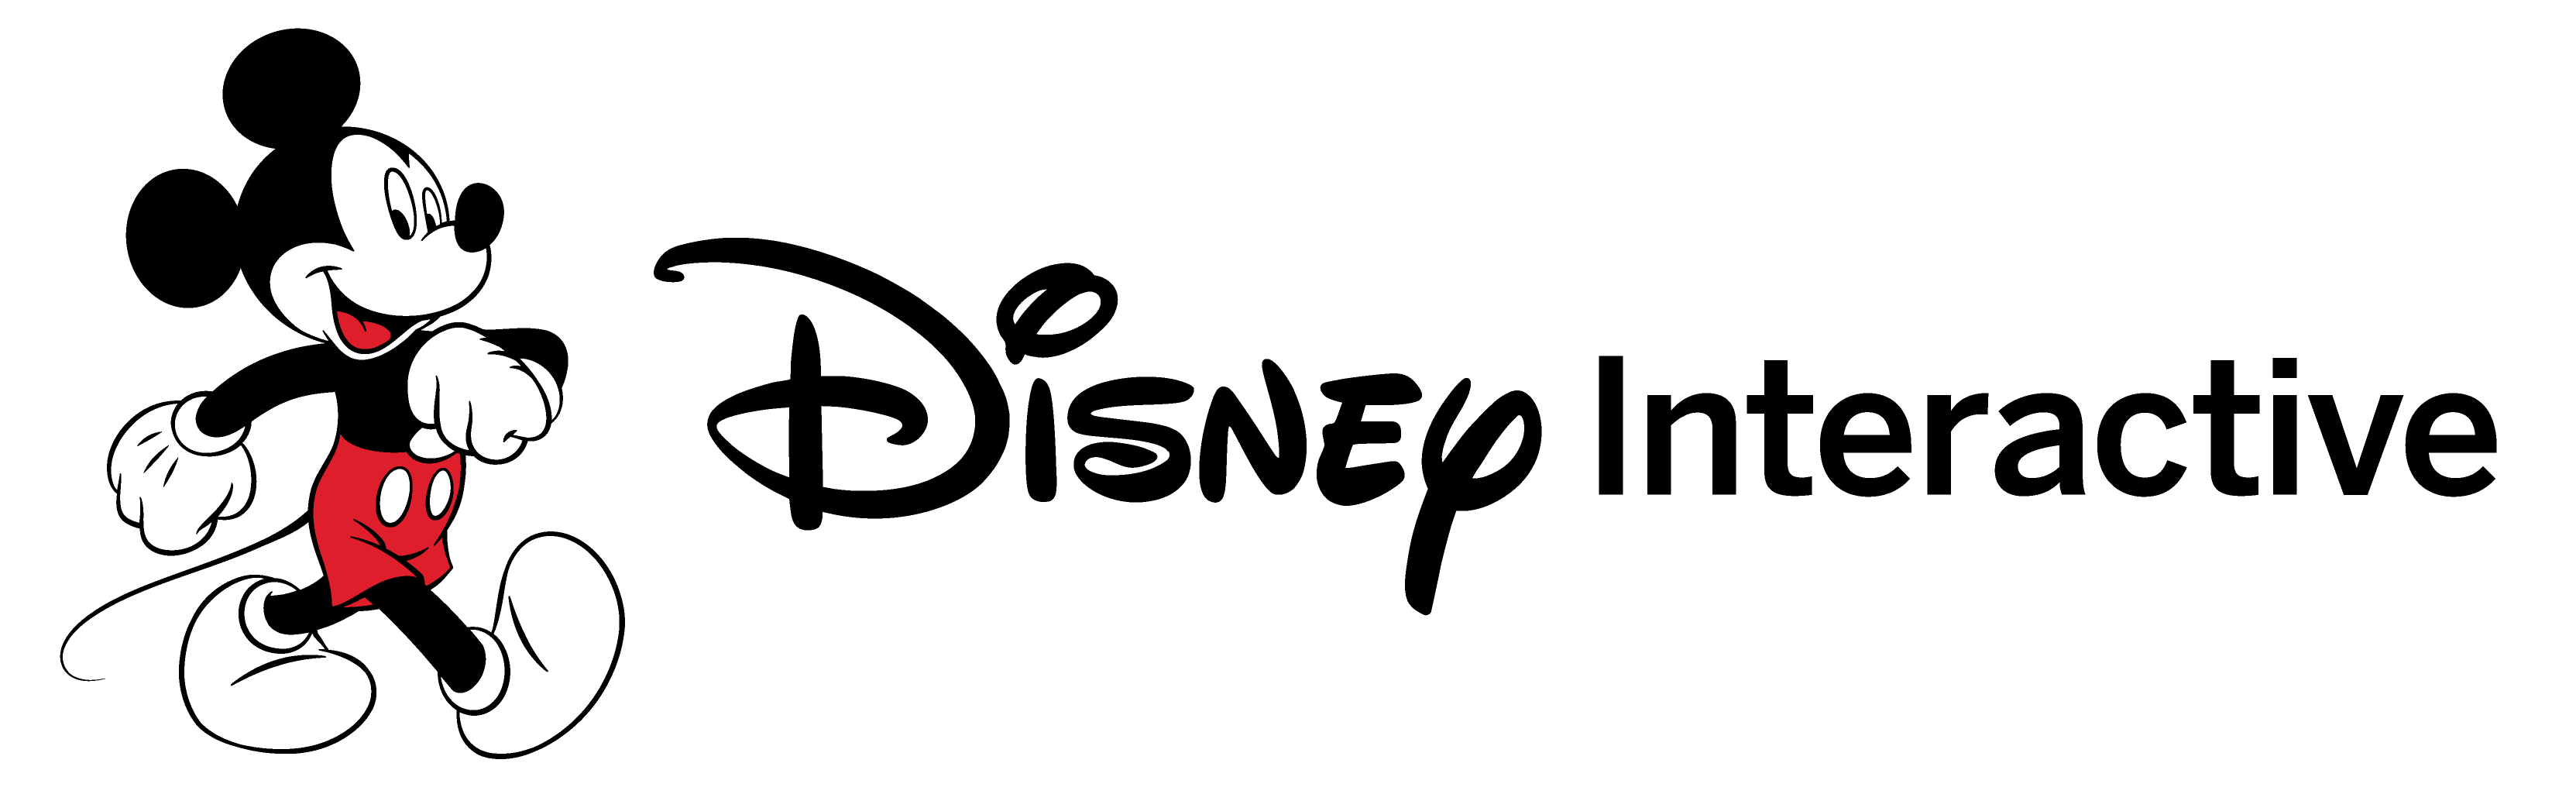 Disney Interactive Logo - Why Disney Abandoned Video Games - The Walt Disney Company (NYSE:DIS ...